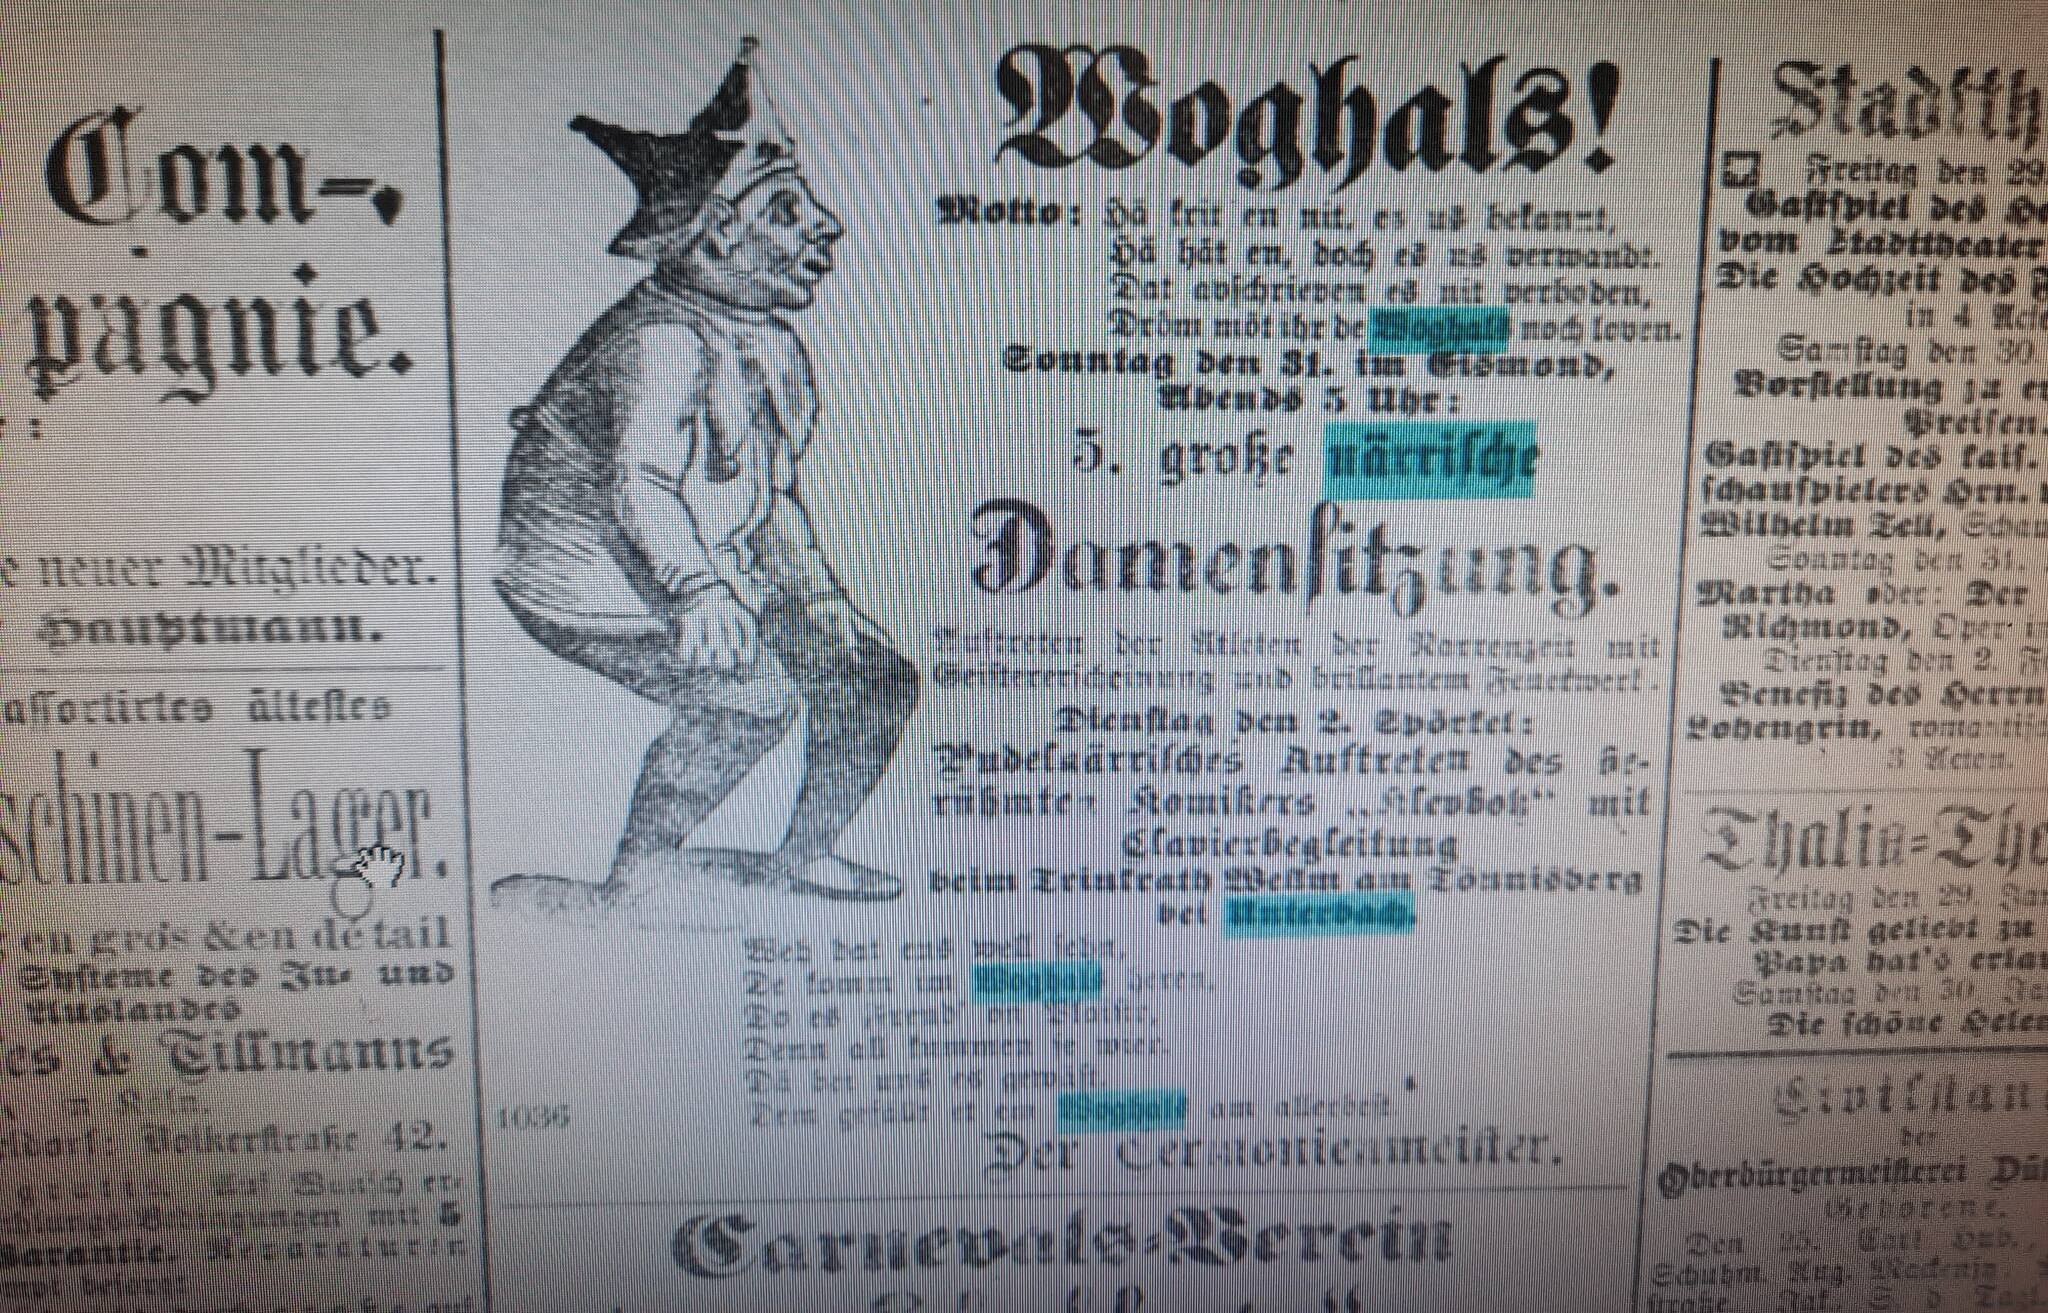 Düsseldorfer Volksblatt vom 29. Januar...